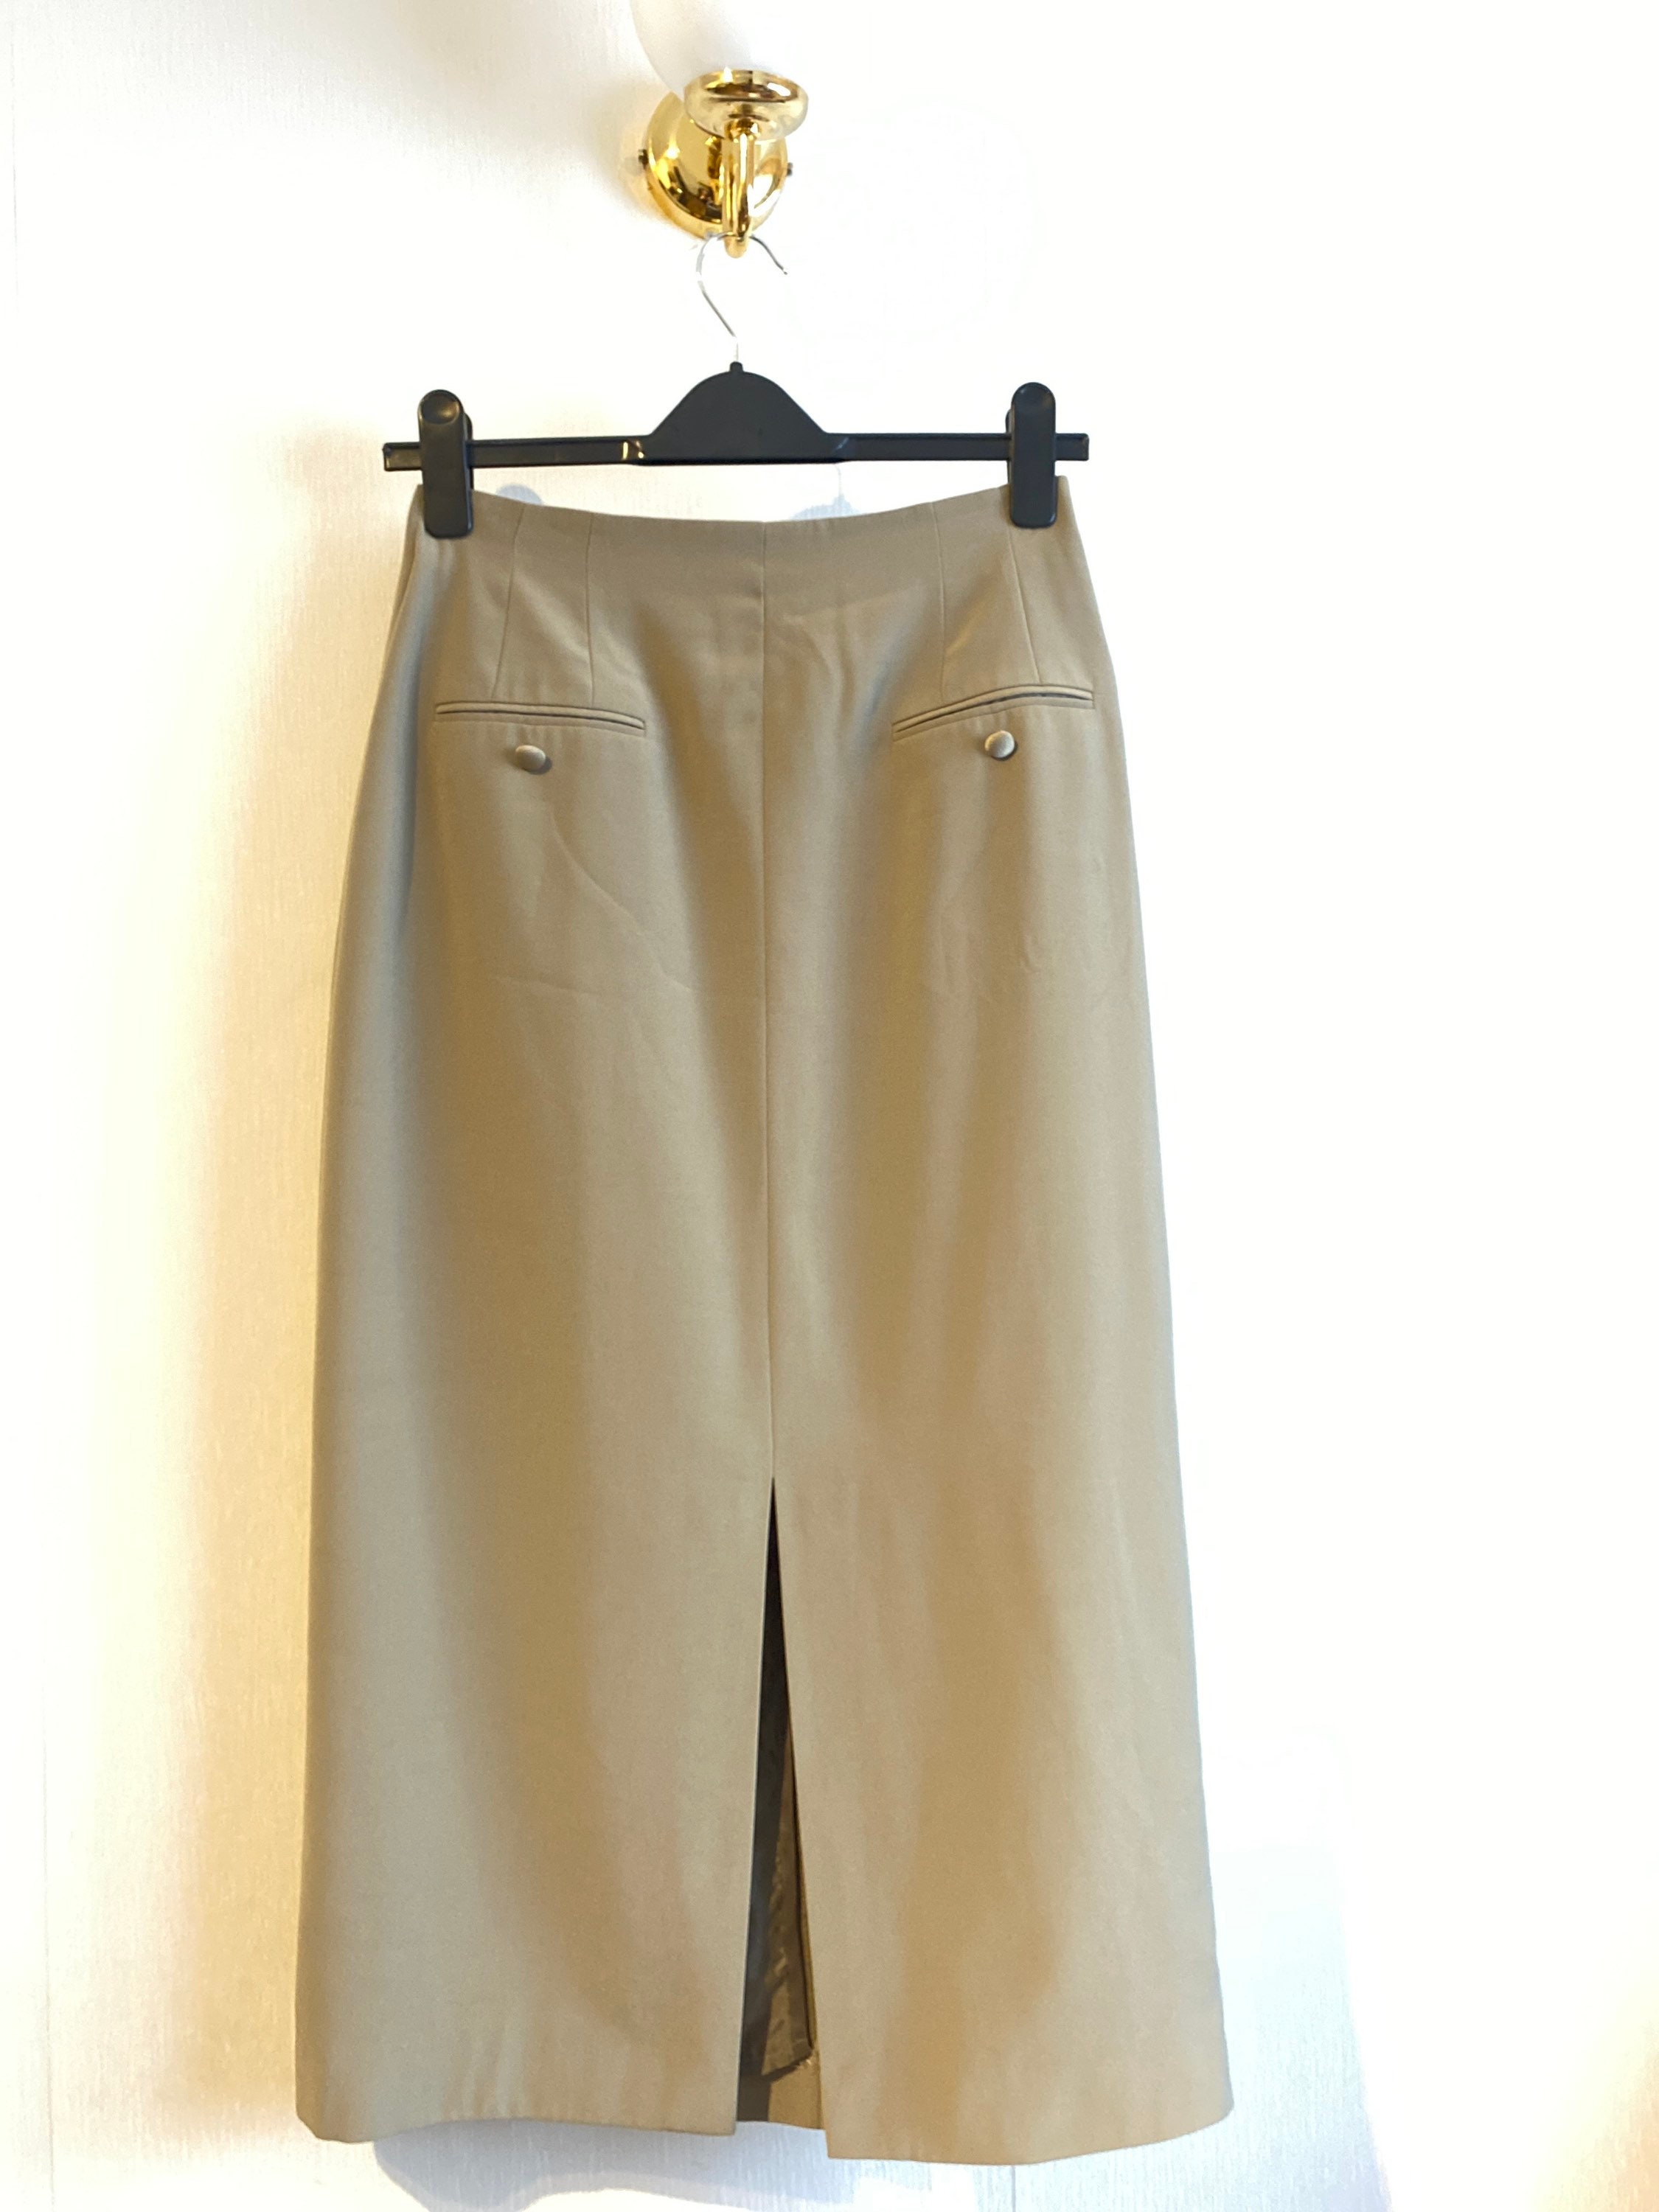 Vintage khaki high waisted skirt pencil skirt 10 | Etsy